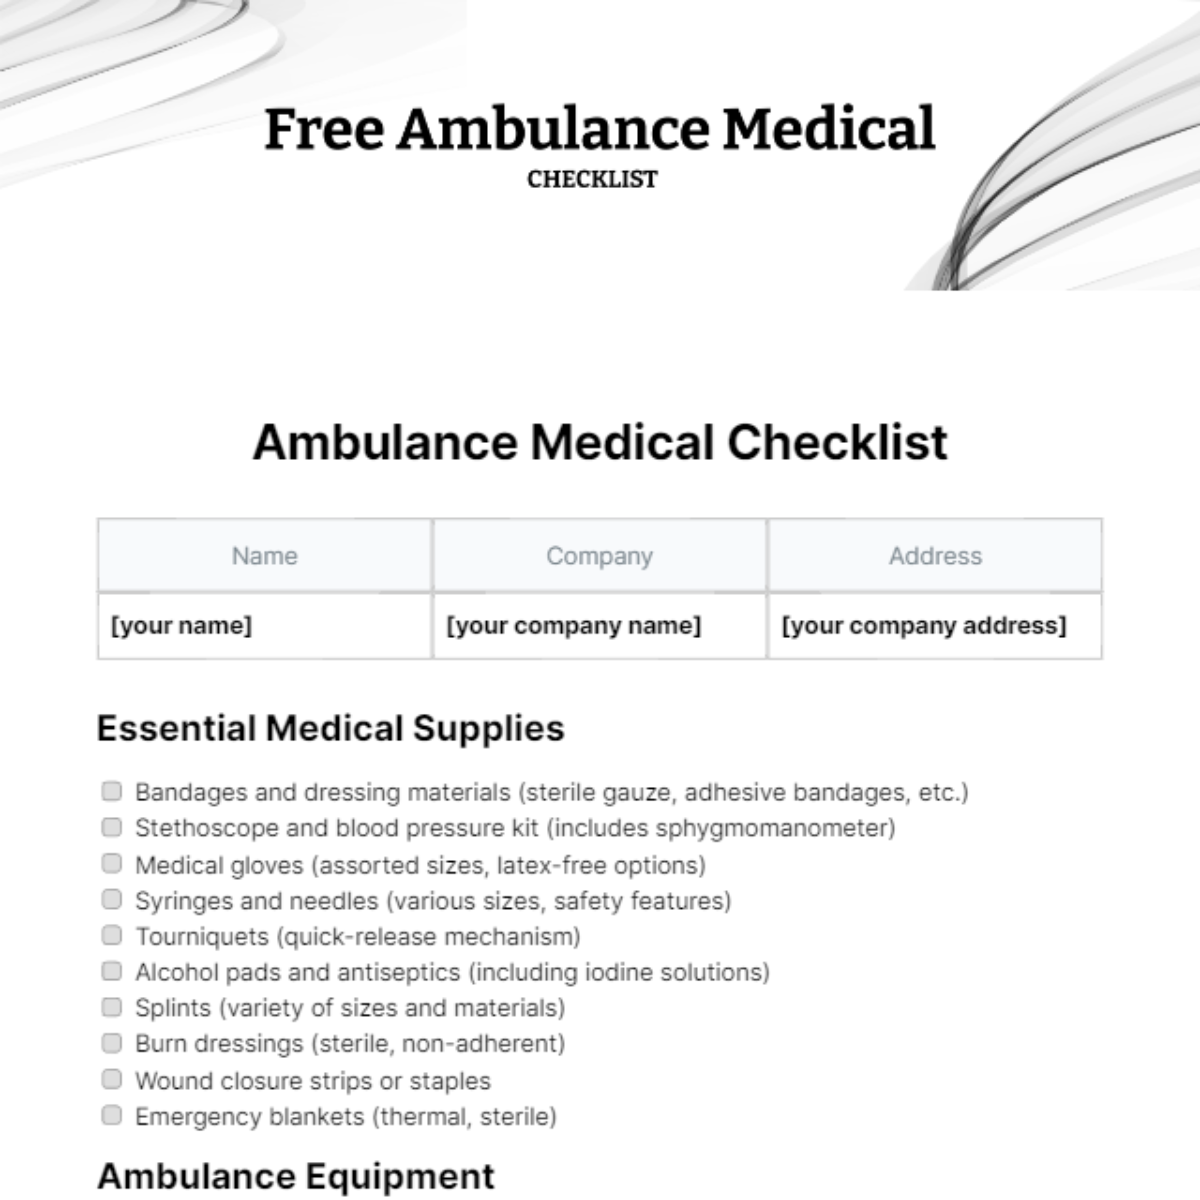 Free Ambulance Medical Checklist Template